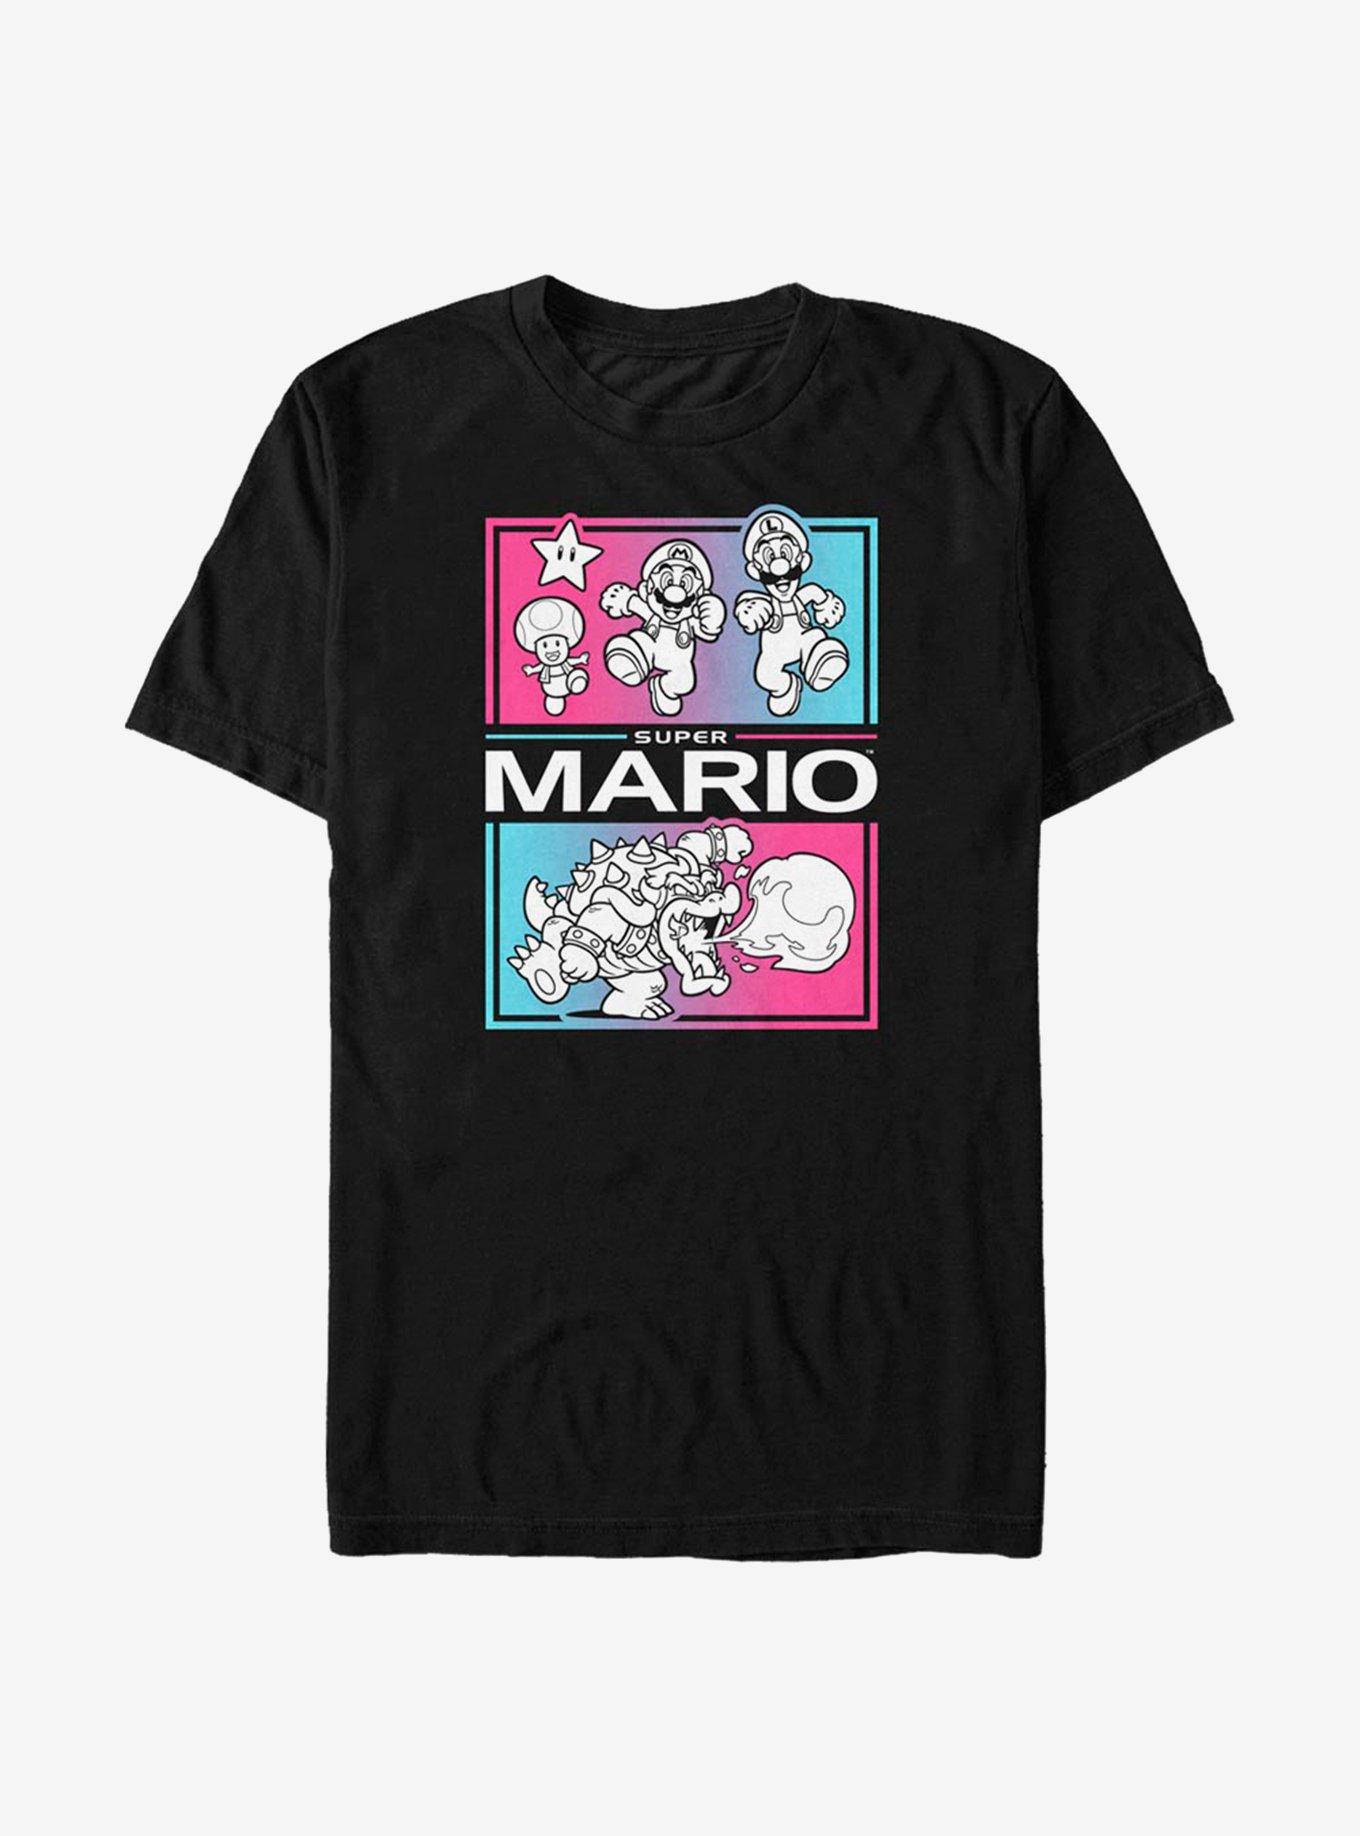 Super Mario Runners Up T-Shirt